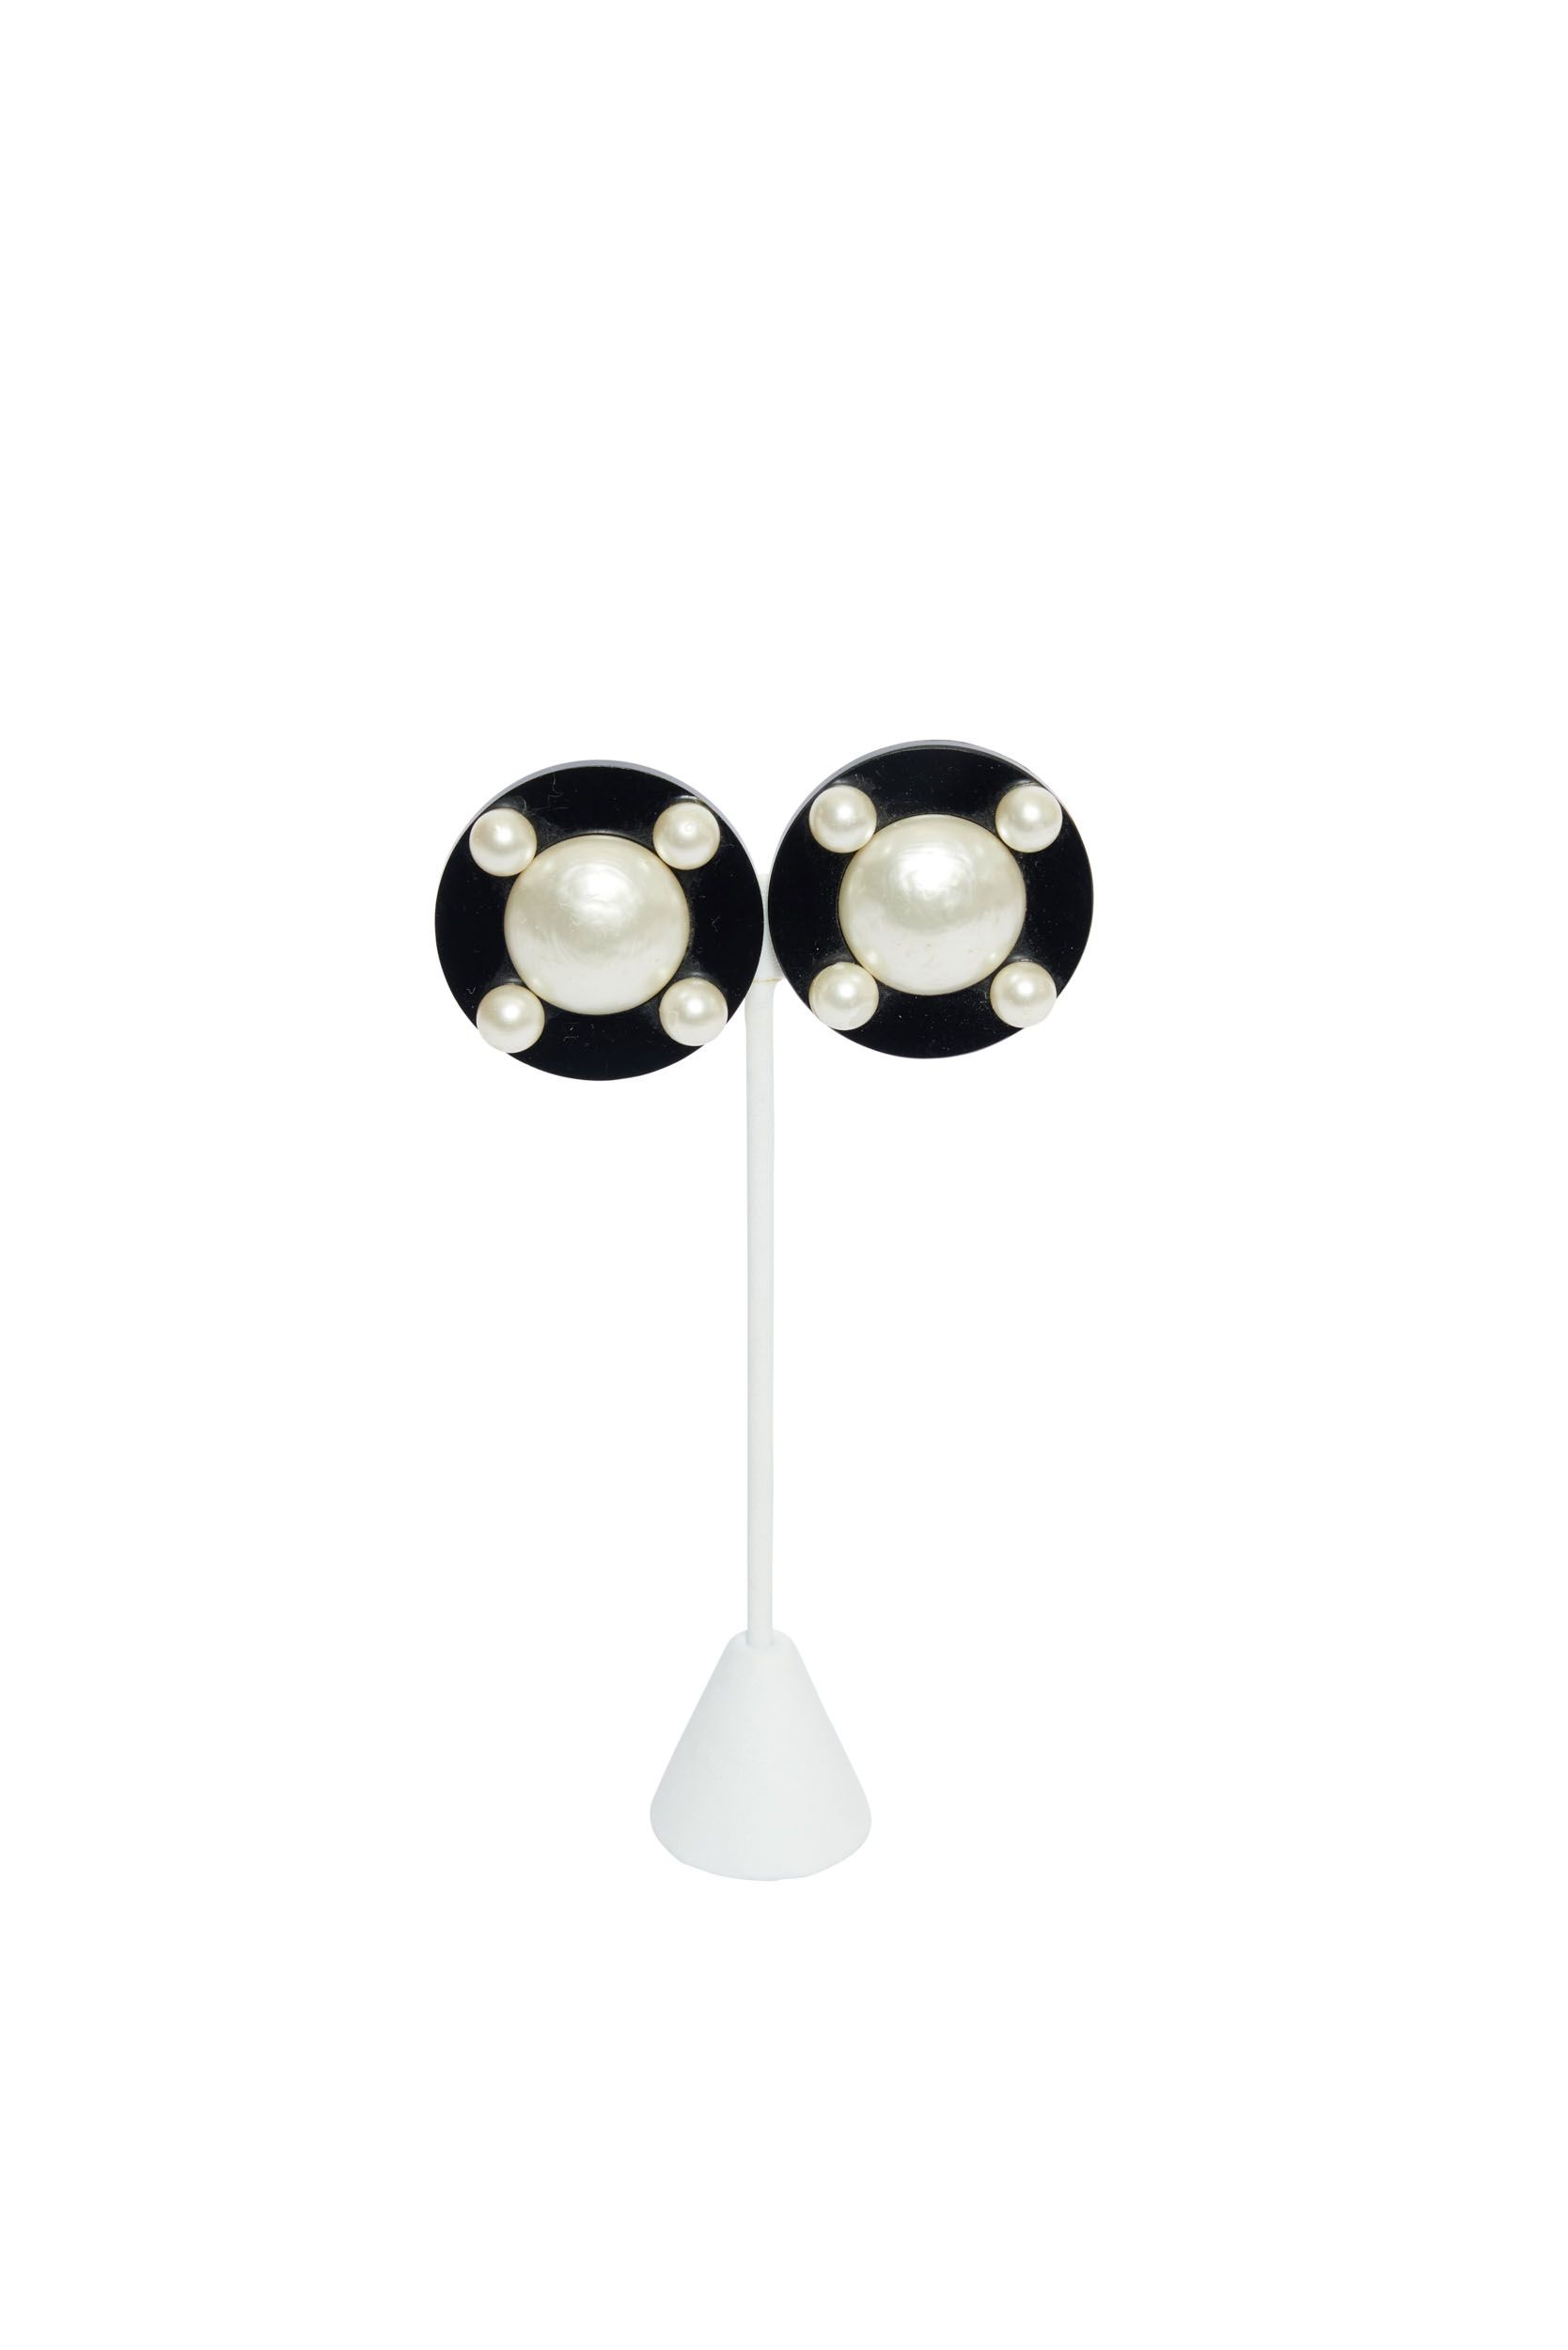 Chanel Black Enamel and Pearls Earrings~P77645652